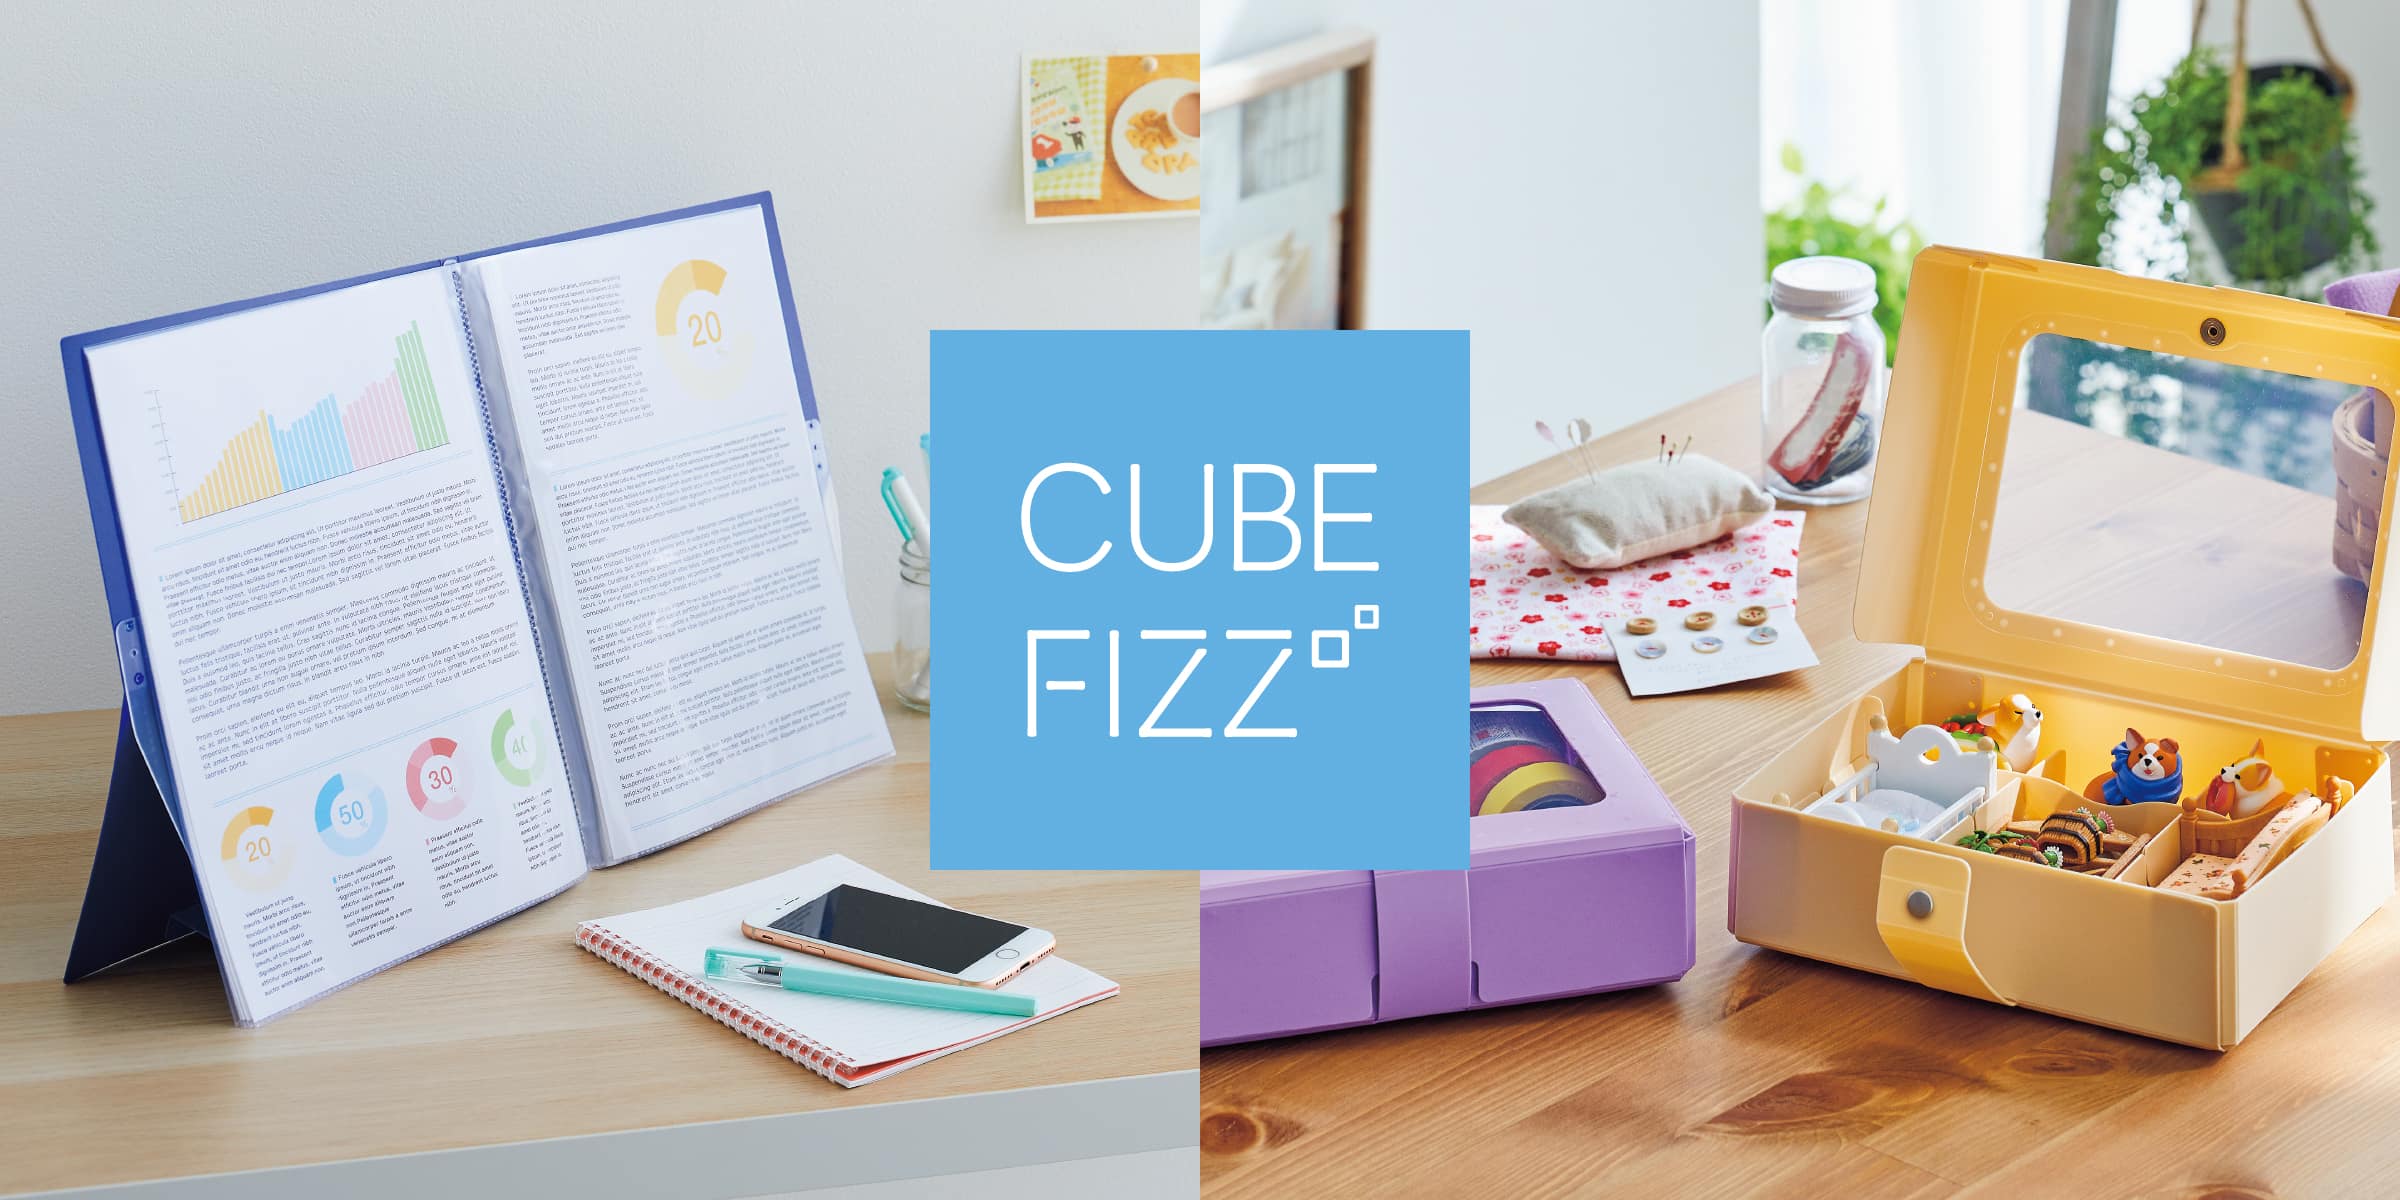 CUBE FIZZシリーズ - 株式会社リヒトラブ